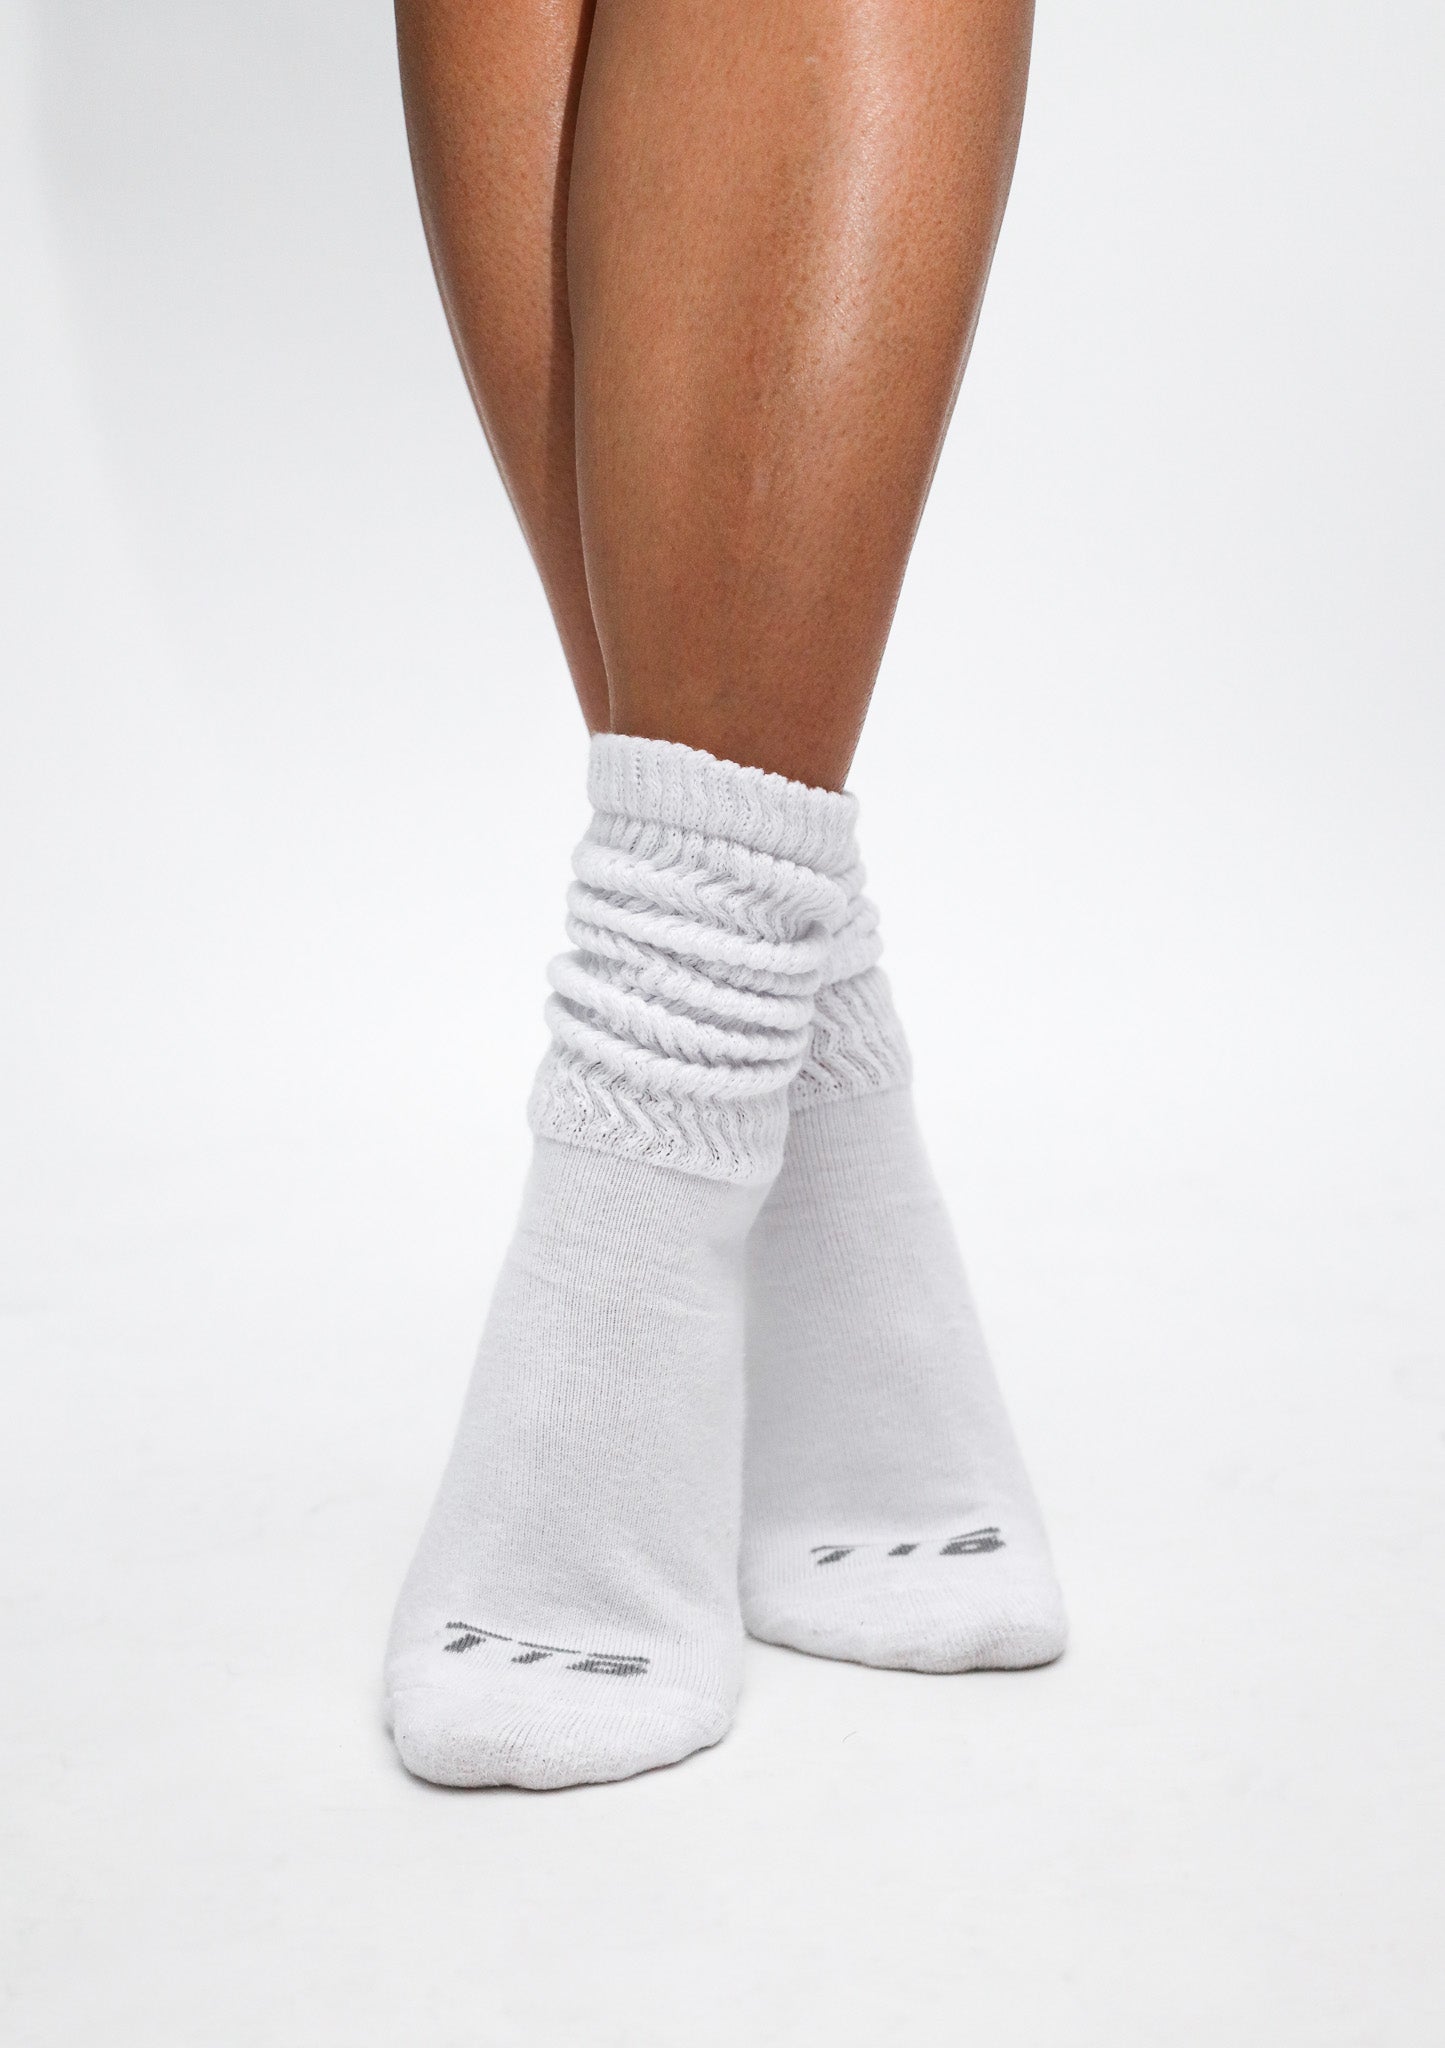 Slouch socks – Naturalistic Beautycon